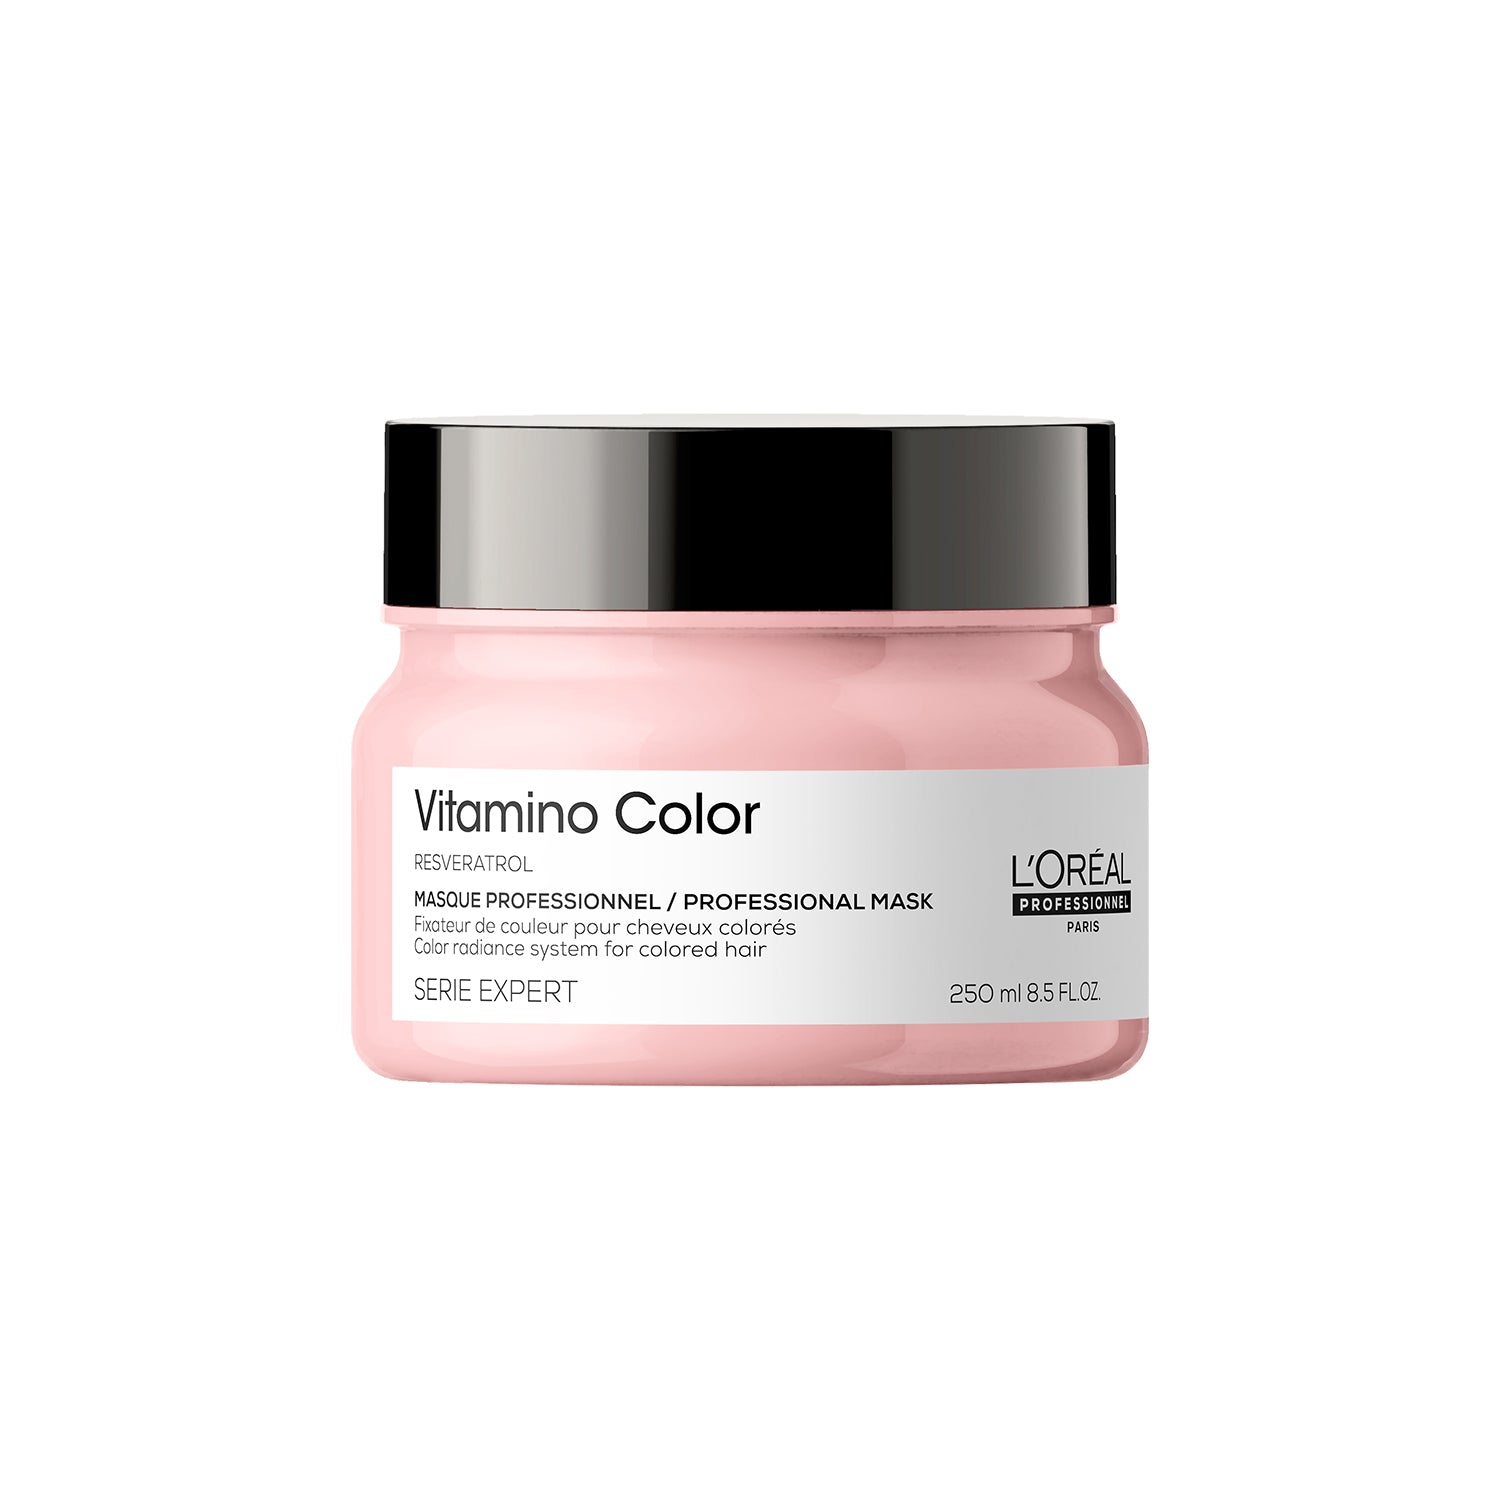 Vitamino Color Colour Radiance Mask